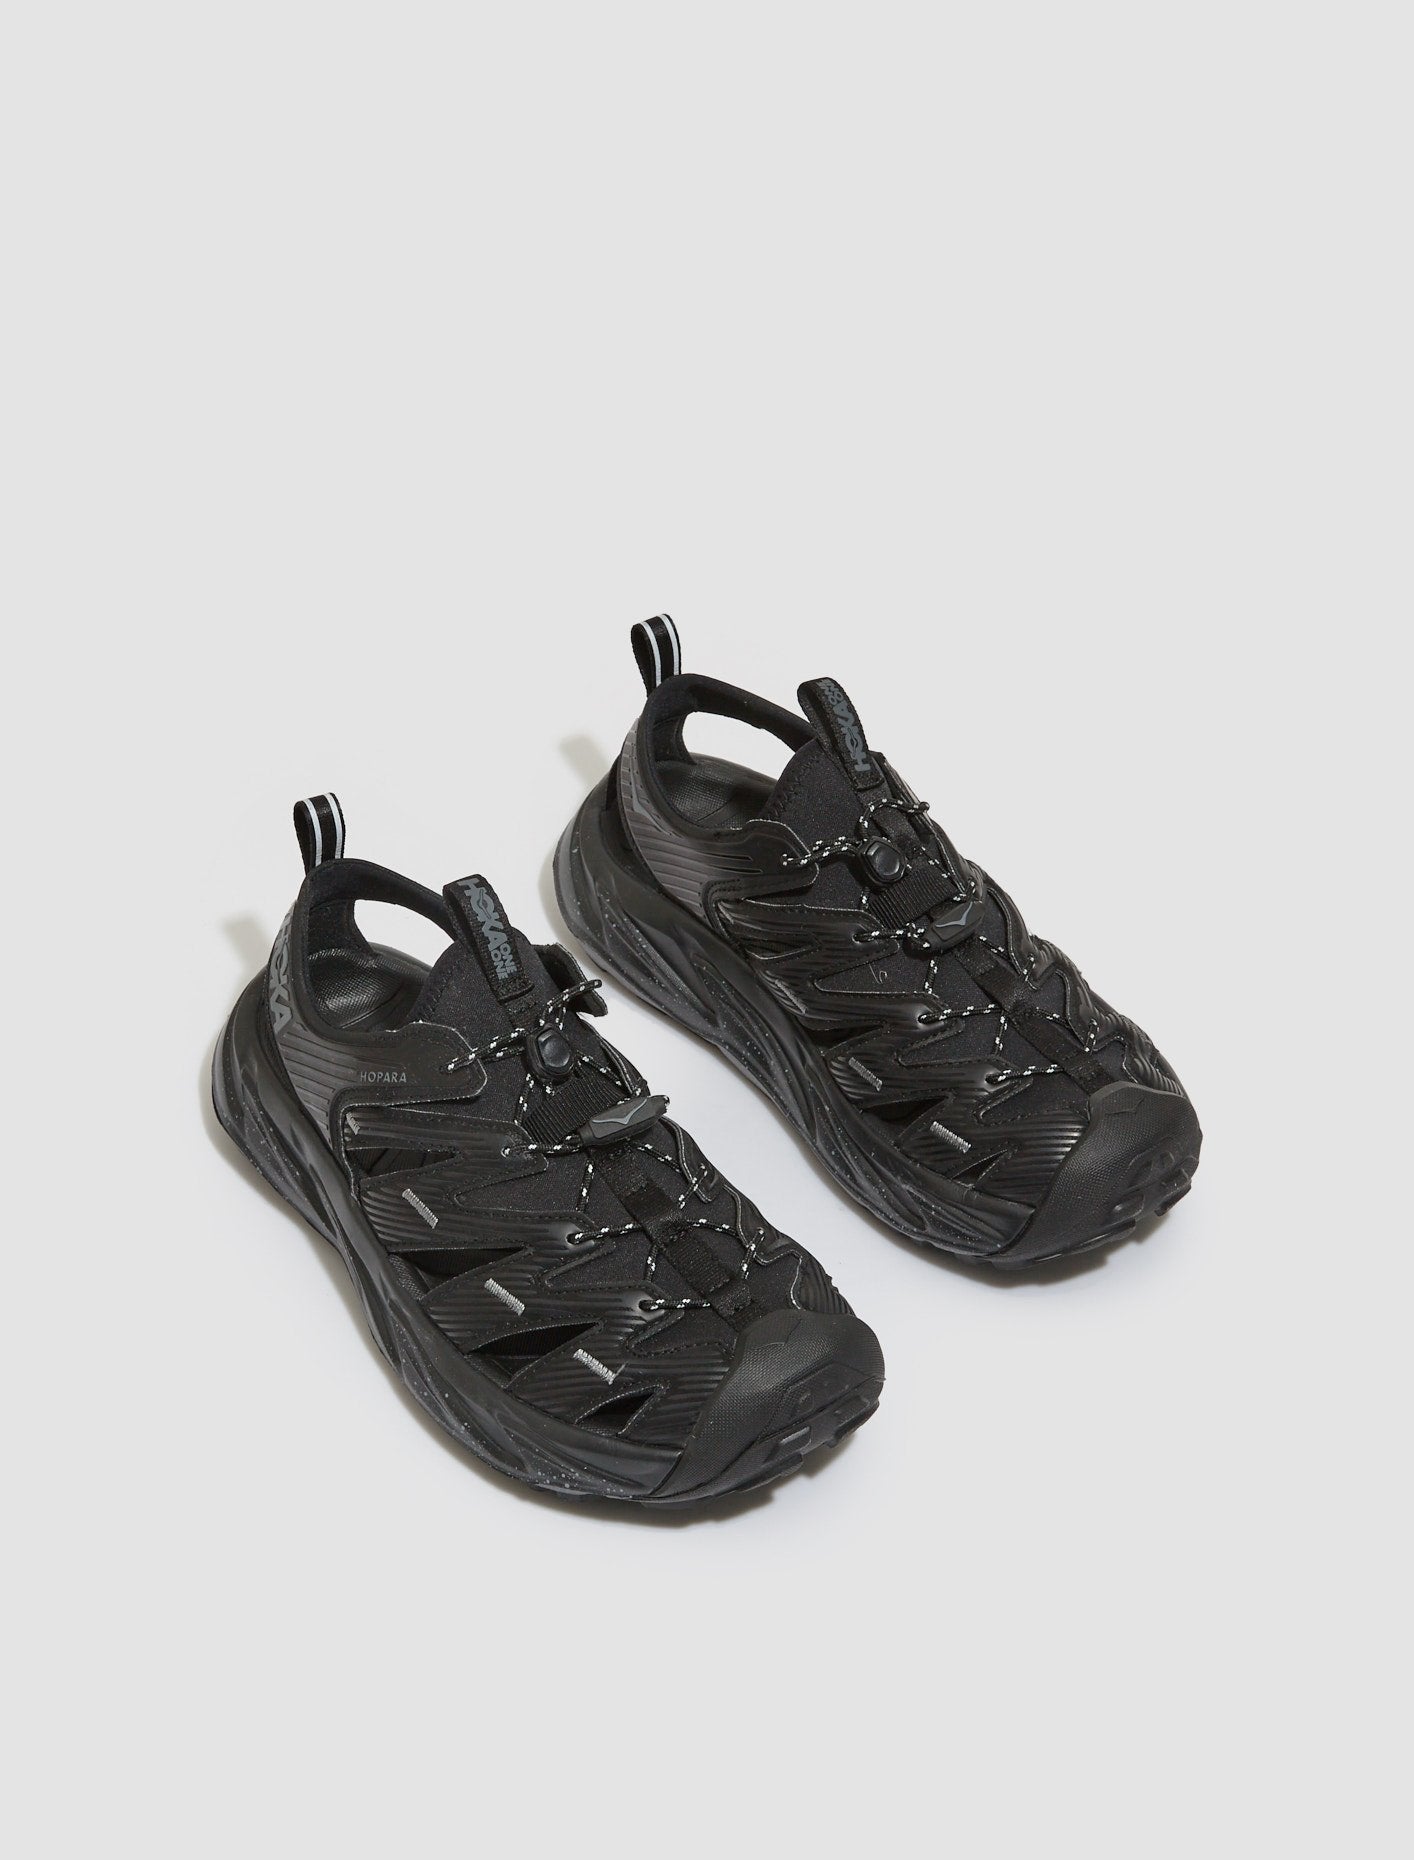 Hoka One One - Hopara Sneaker in Black u0026 Castlerock - 1123112-BCSTL